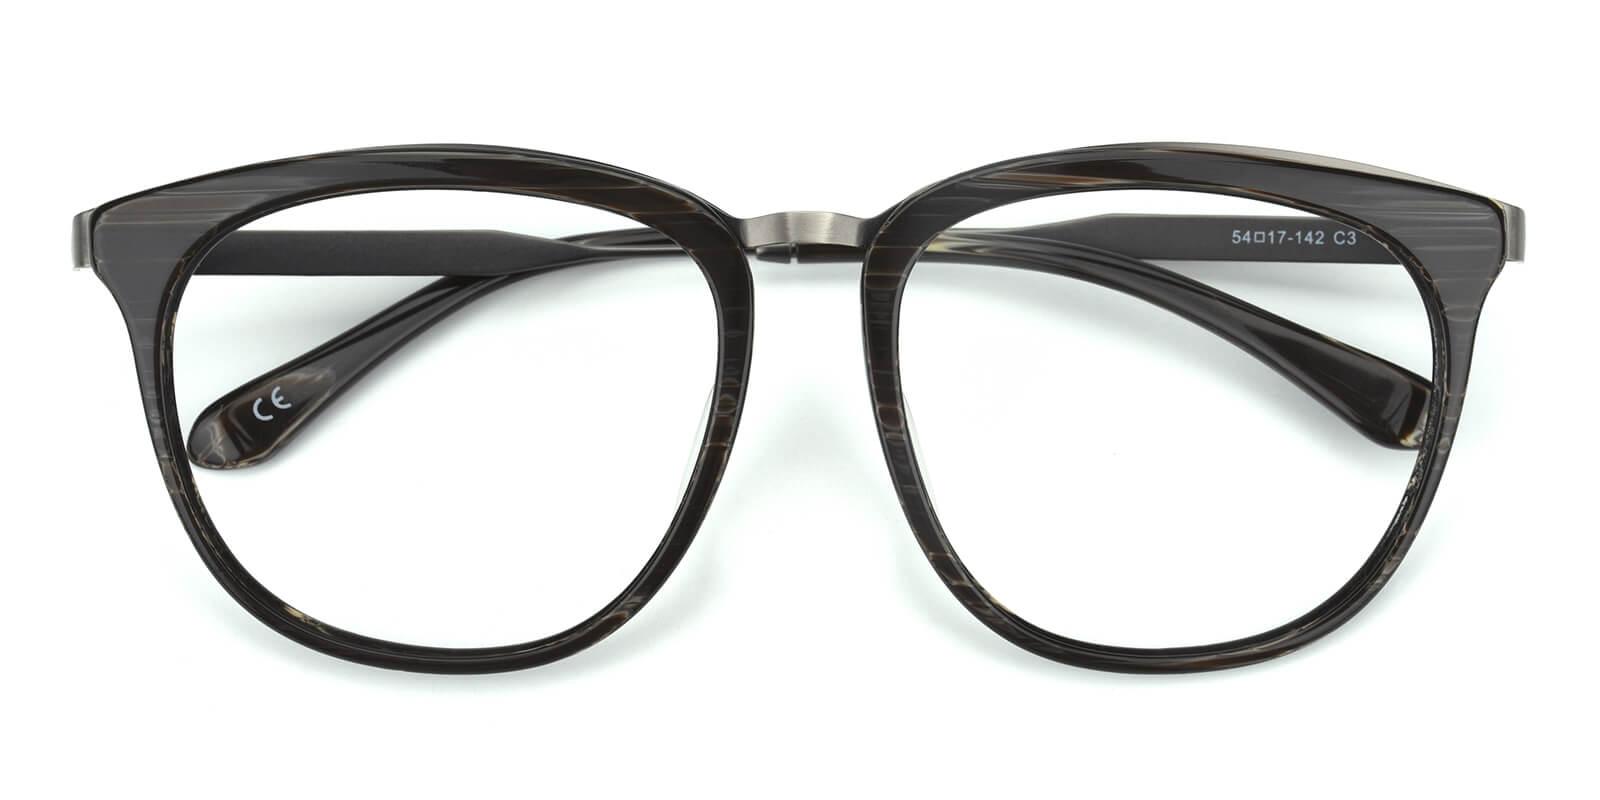 Grain-Striped-Square-Metal / Acetate-Eyeglasses-detail